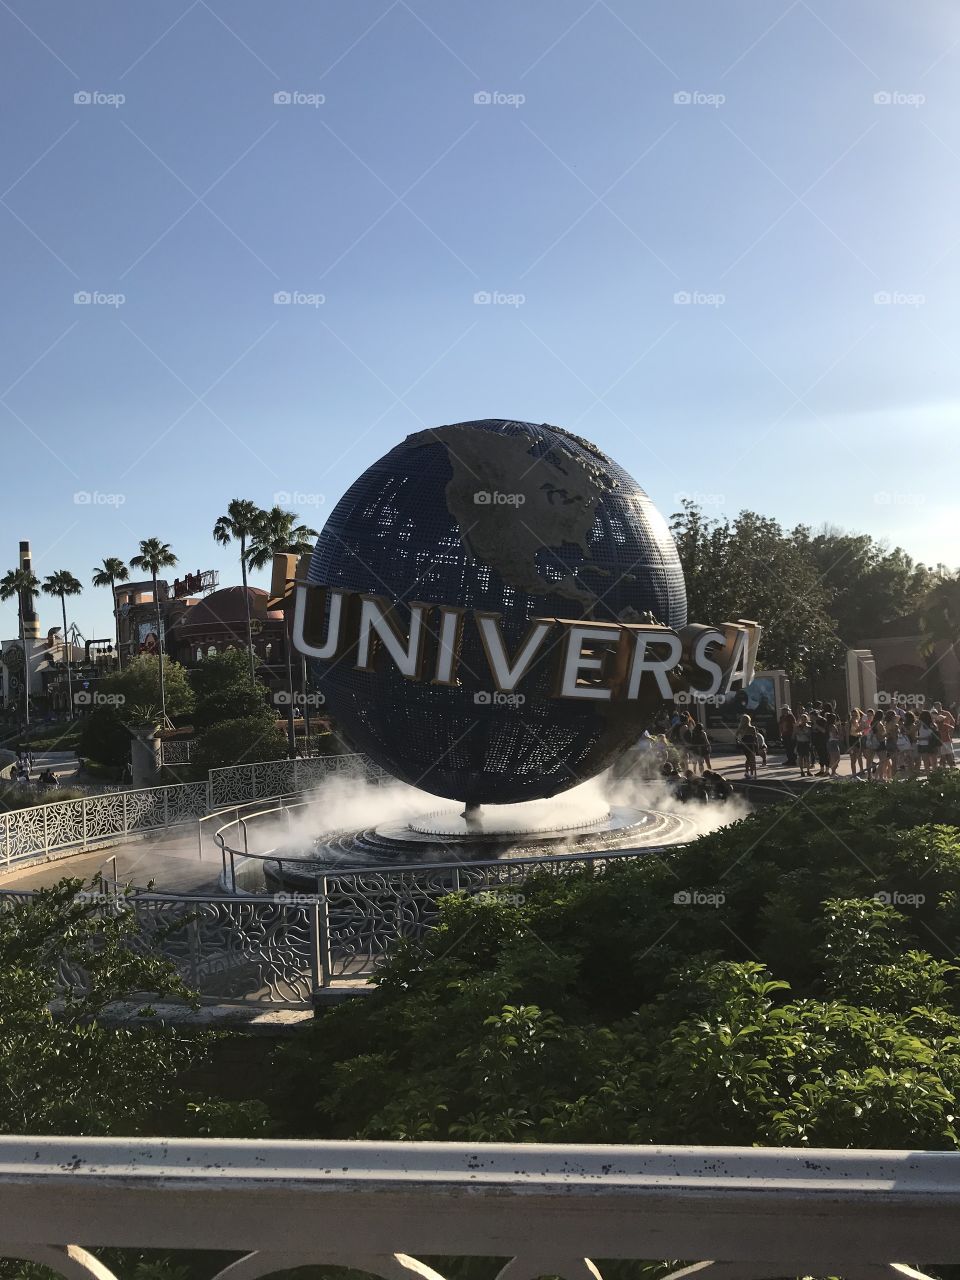 The universal globe